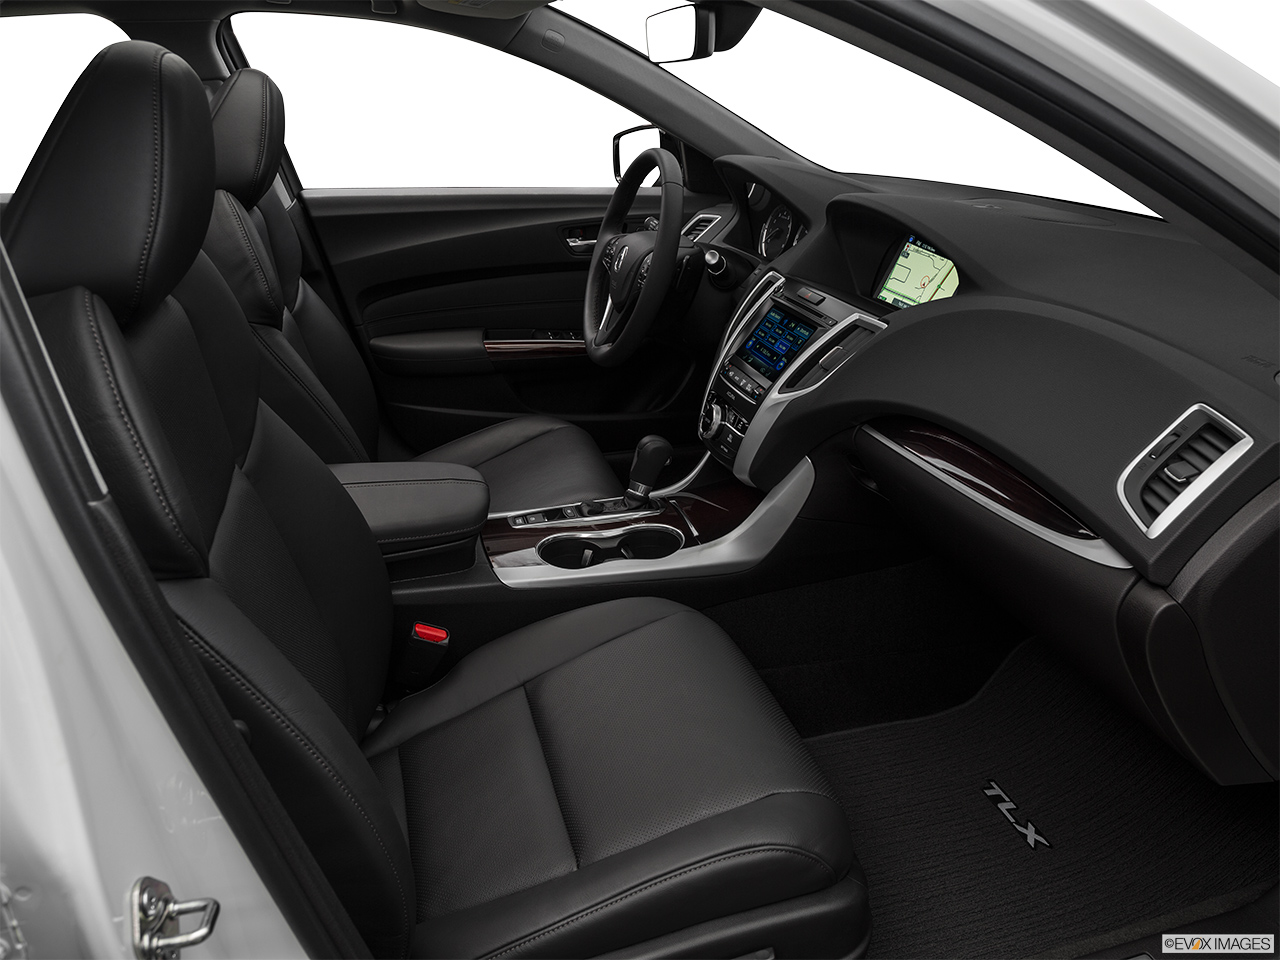 2017 Acura TLX 2.4 8-DCP P-AWS Passenger seat. 